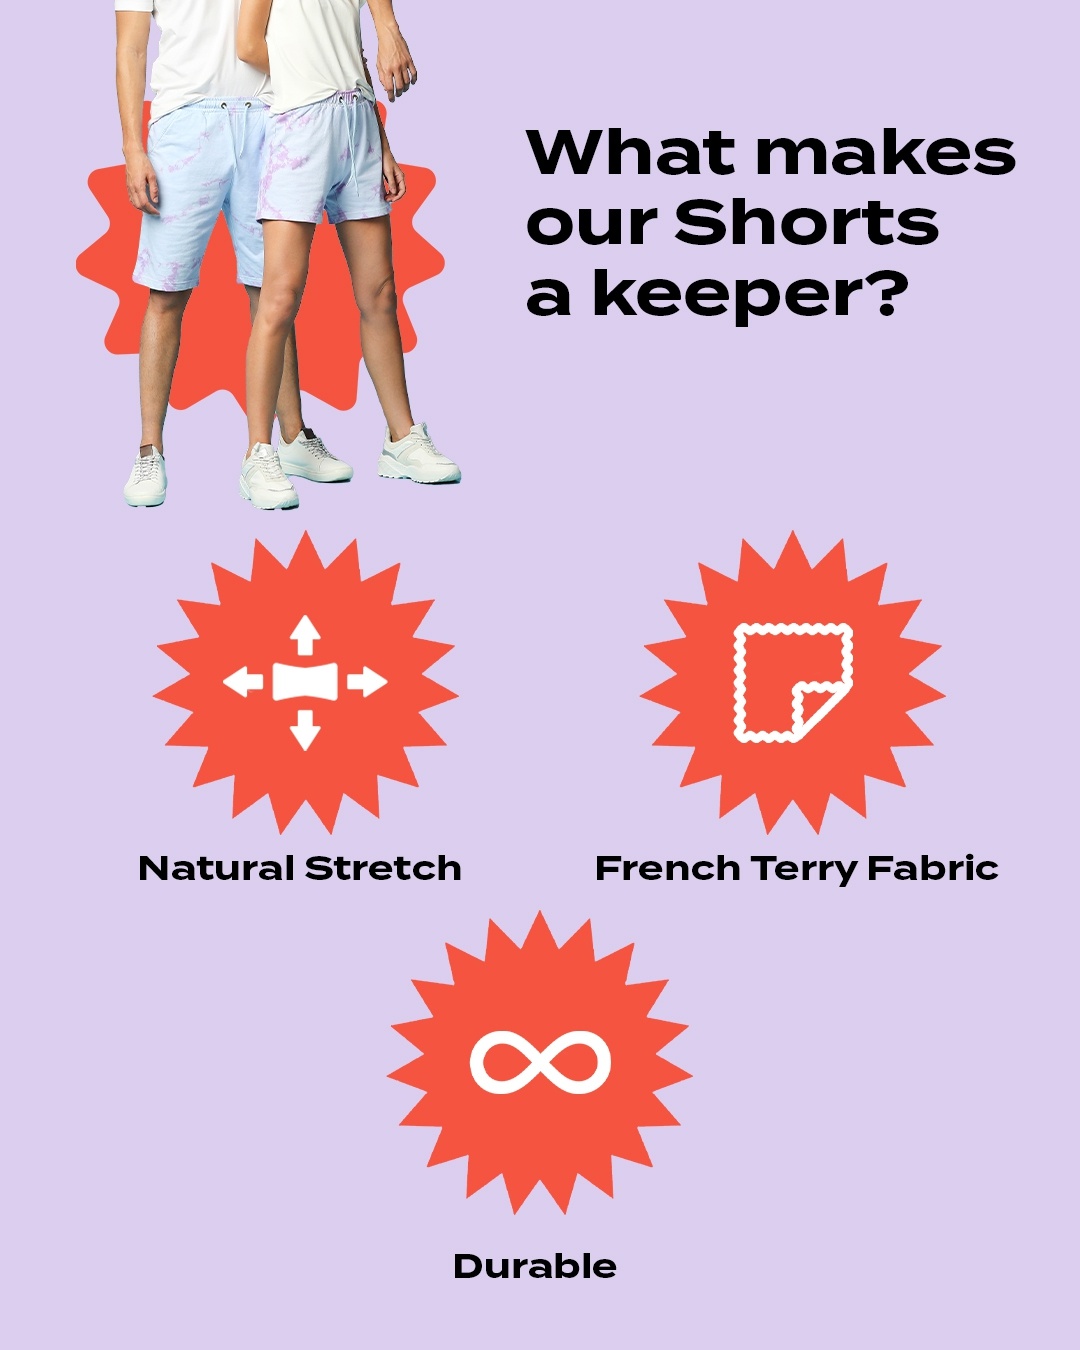 Shop Women's Snazzy Green Tape Shorts